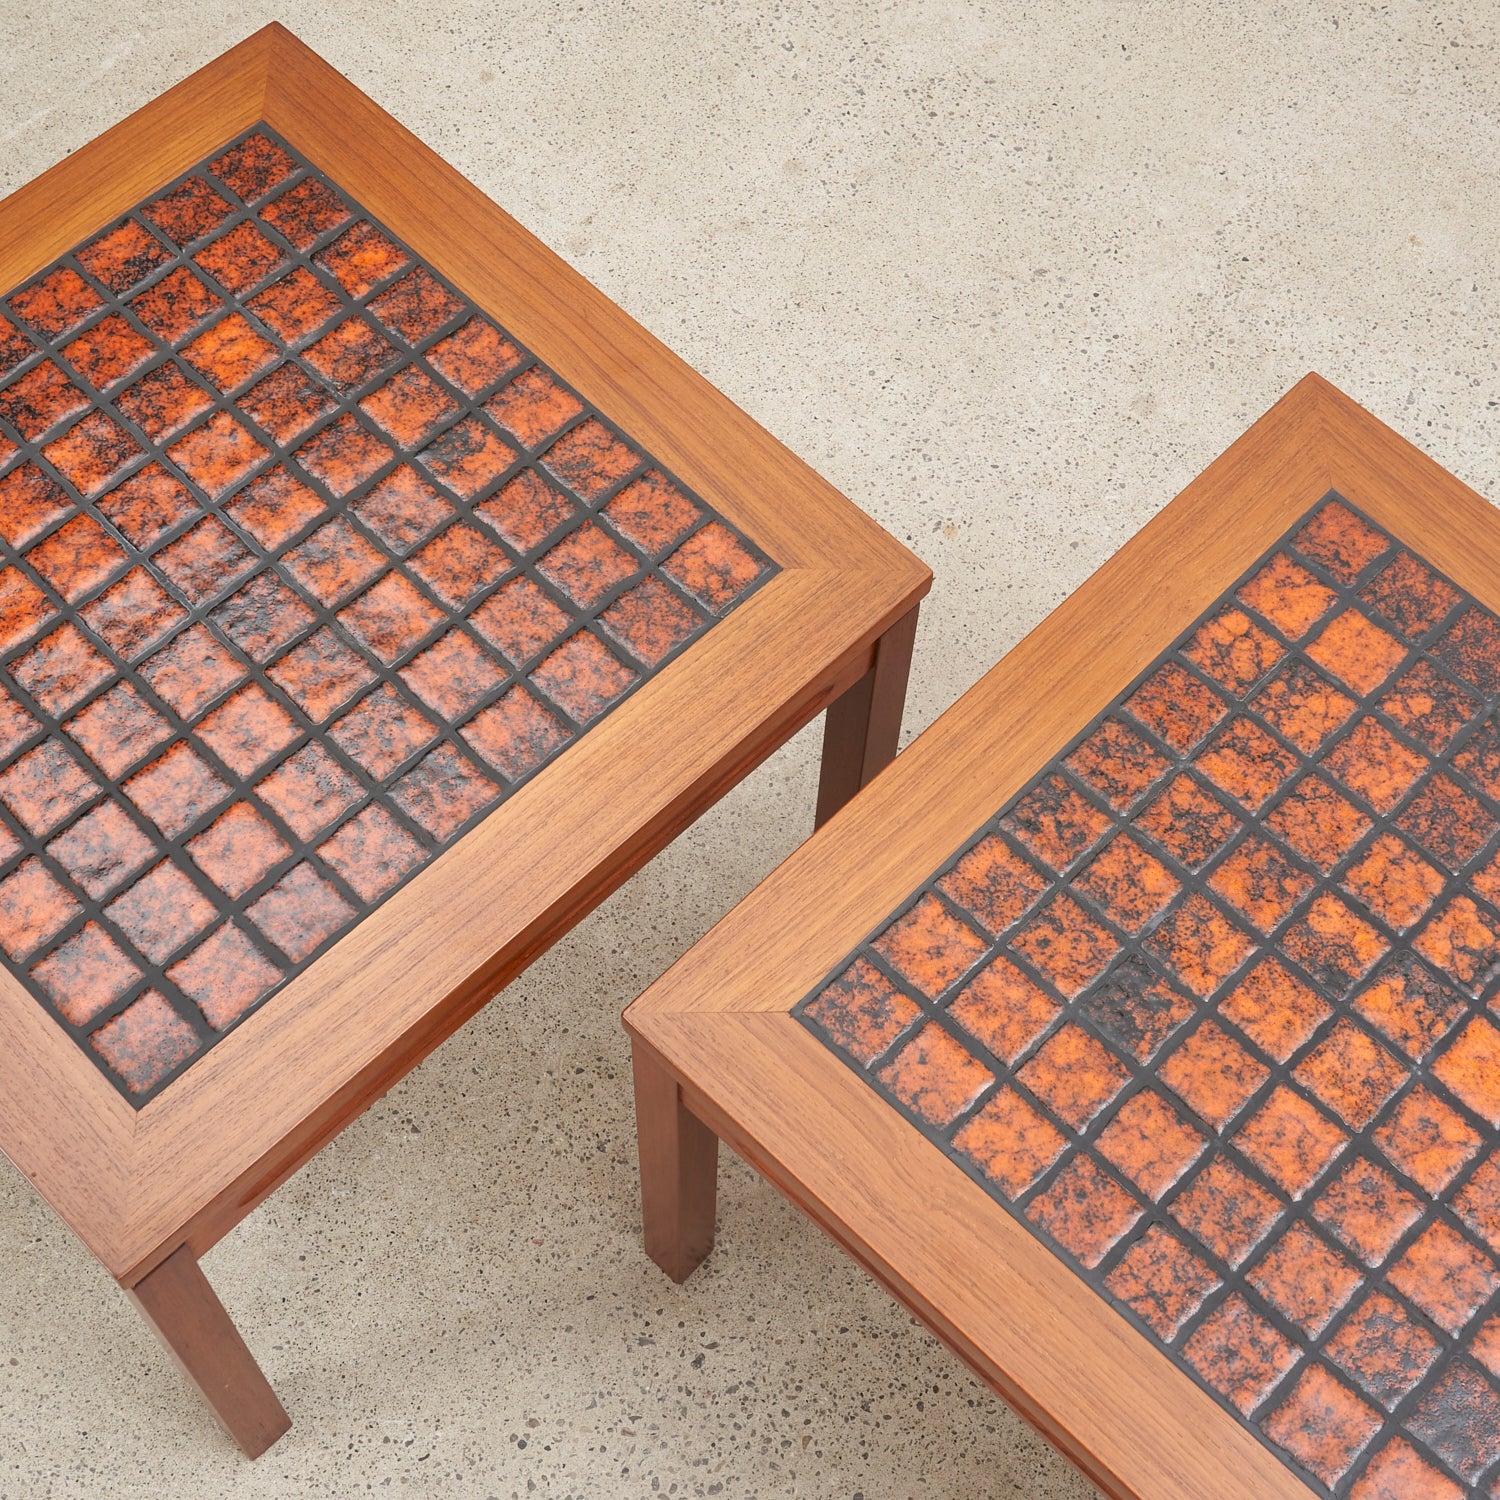 Pair of Danish Teak Tile Top Side Tables